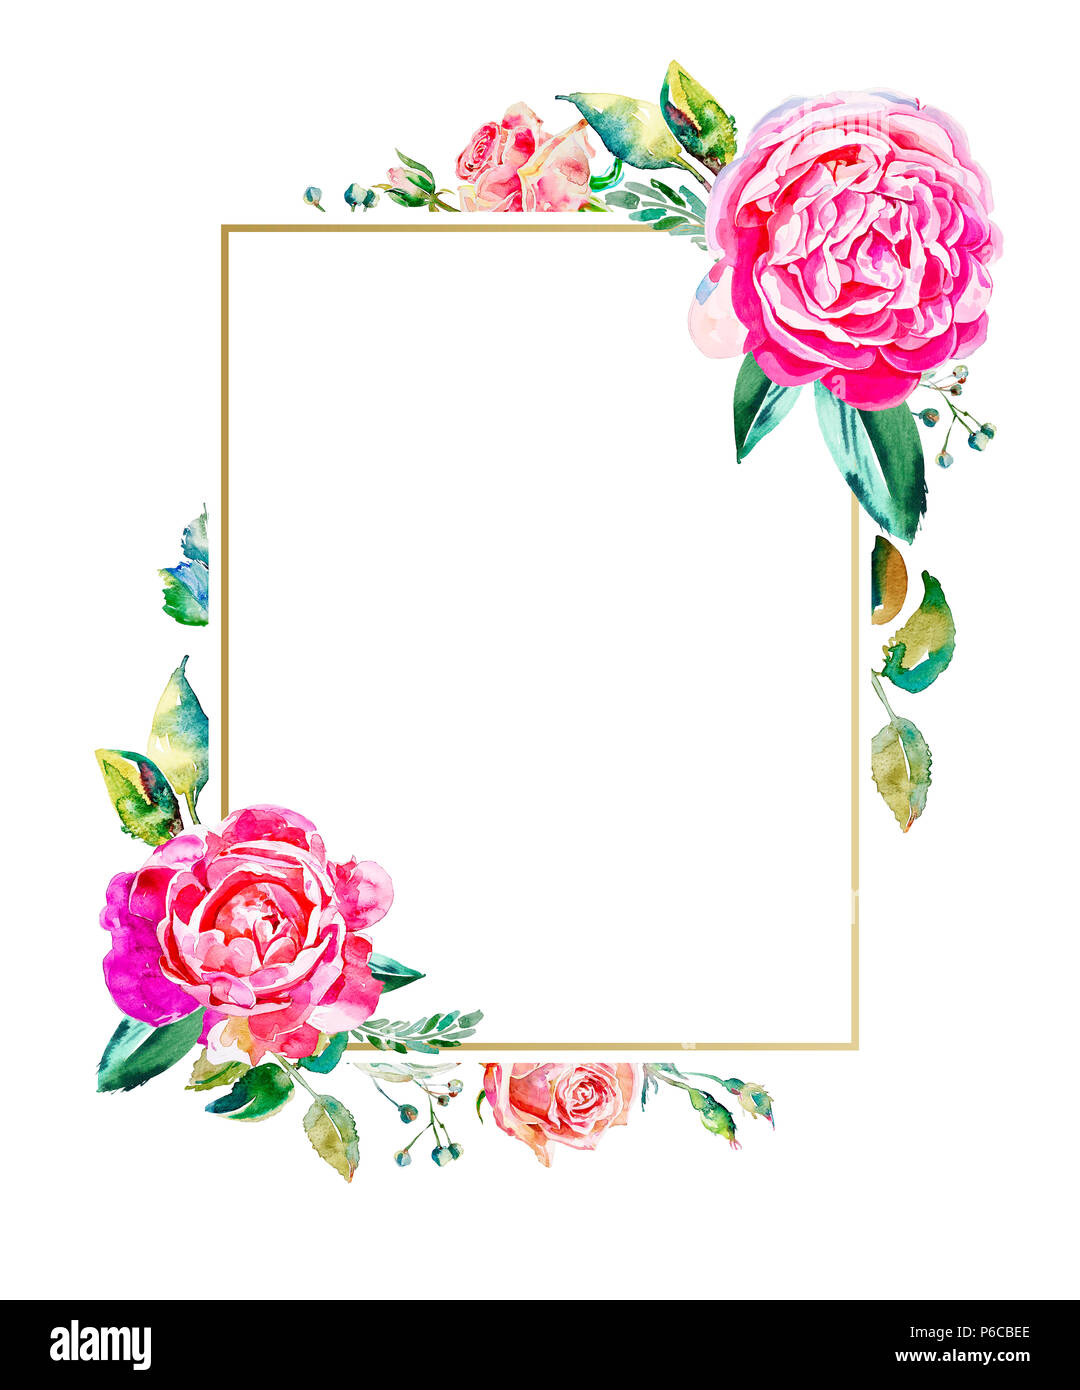 Premium Vector  Golden frame with pink roses floral design wedding monogram  watercolor illustrations